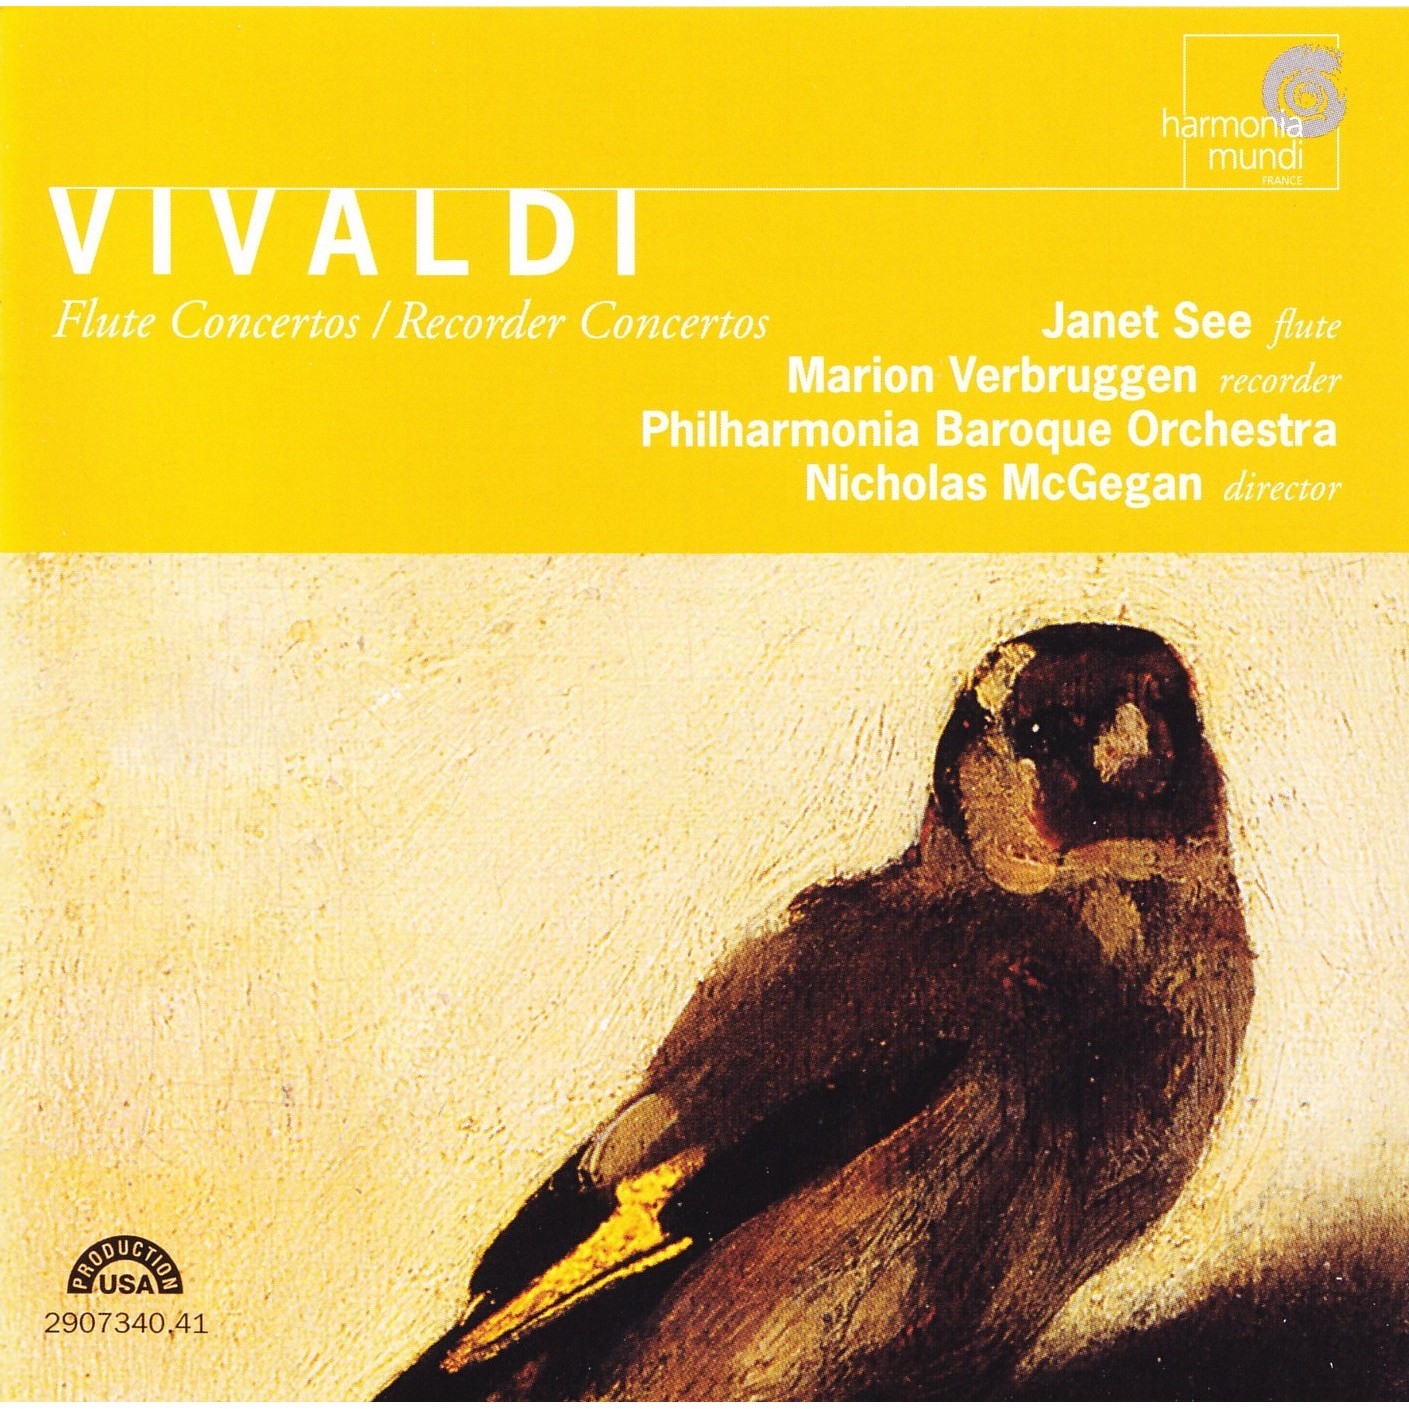 Vivaldi - Recorder Concertos. A.Vivaldi_ Recorder Concertos обложка. Vivaldi - Recorder Concertos danlaurin.